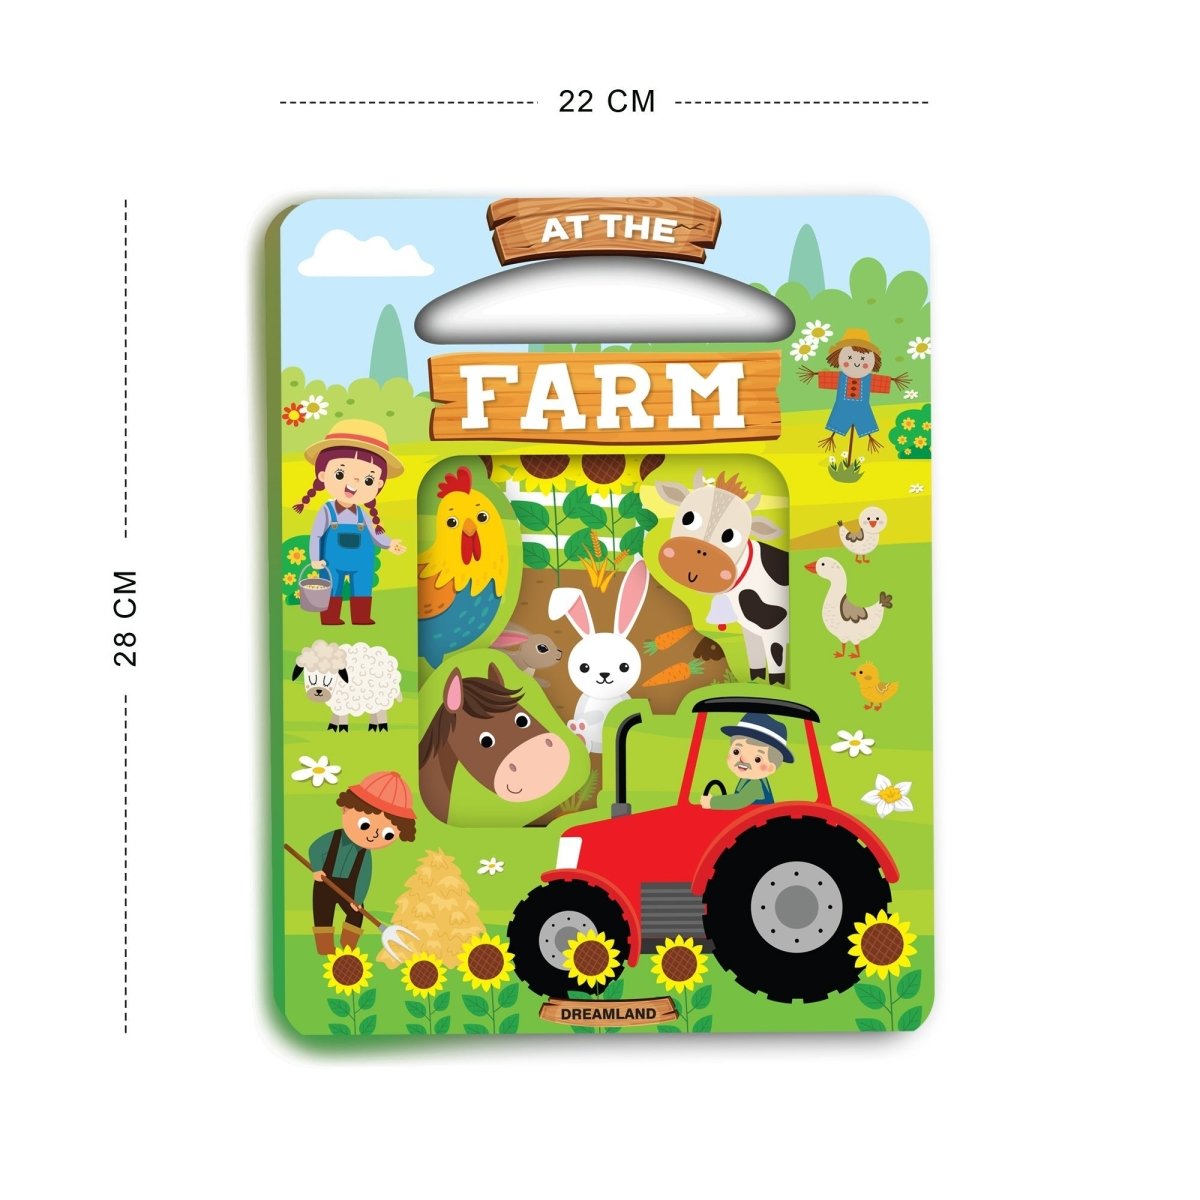 Dreamland Publications Die Cut Window Board Book- At The Farm Picture Book - 9788196034825